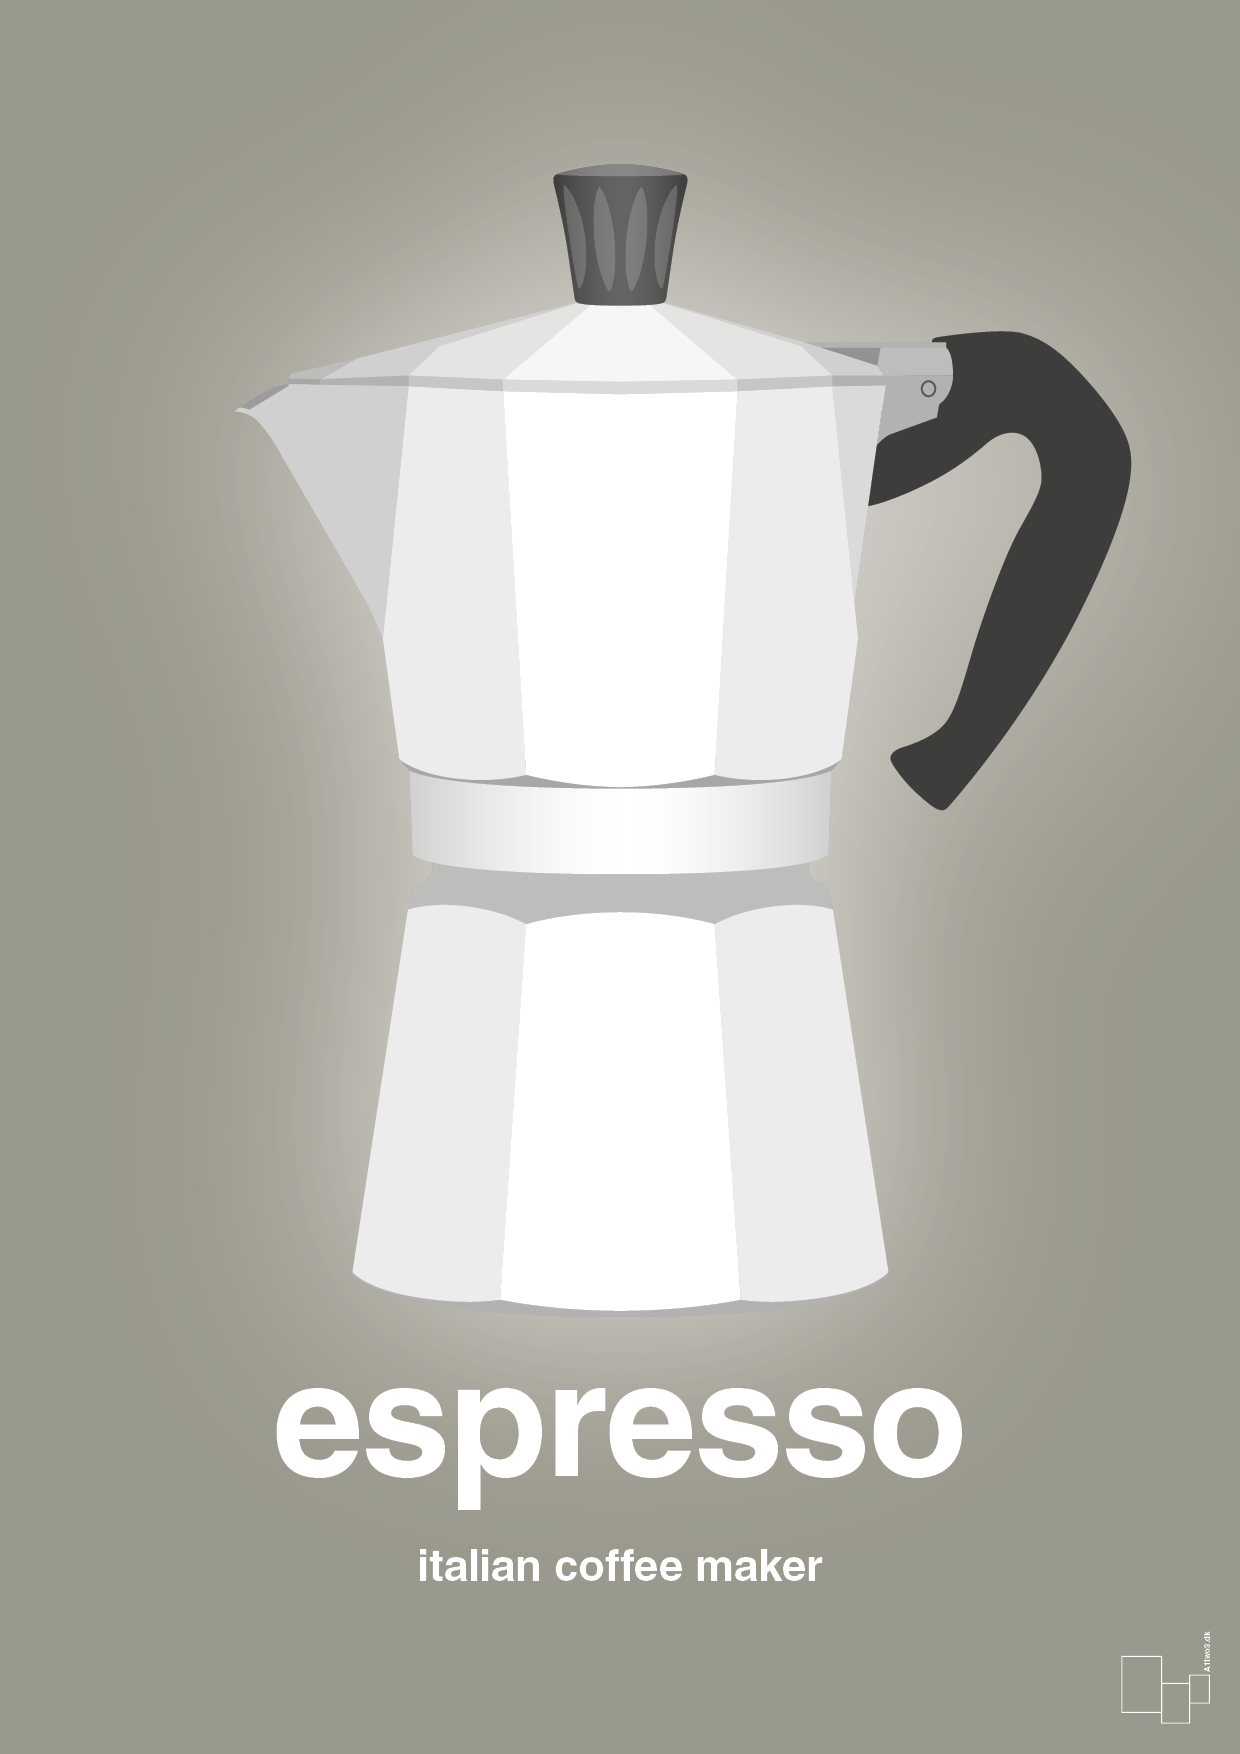 espresso - italian coffee maker - Plakat med Mad & Drikke i Battleship Gray